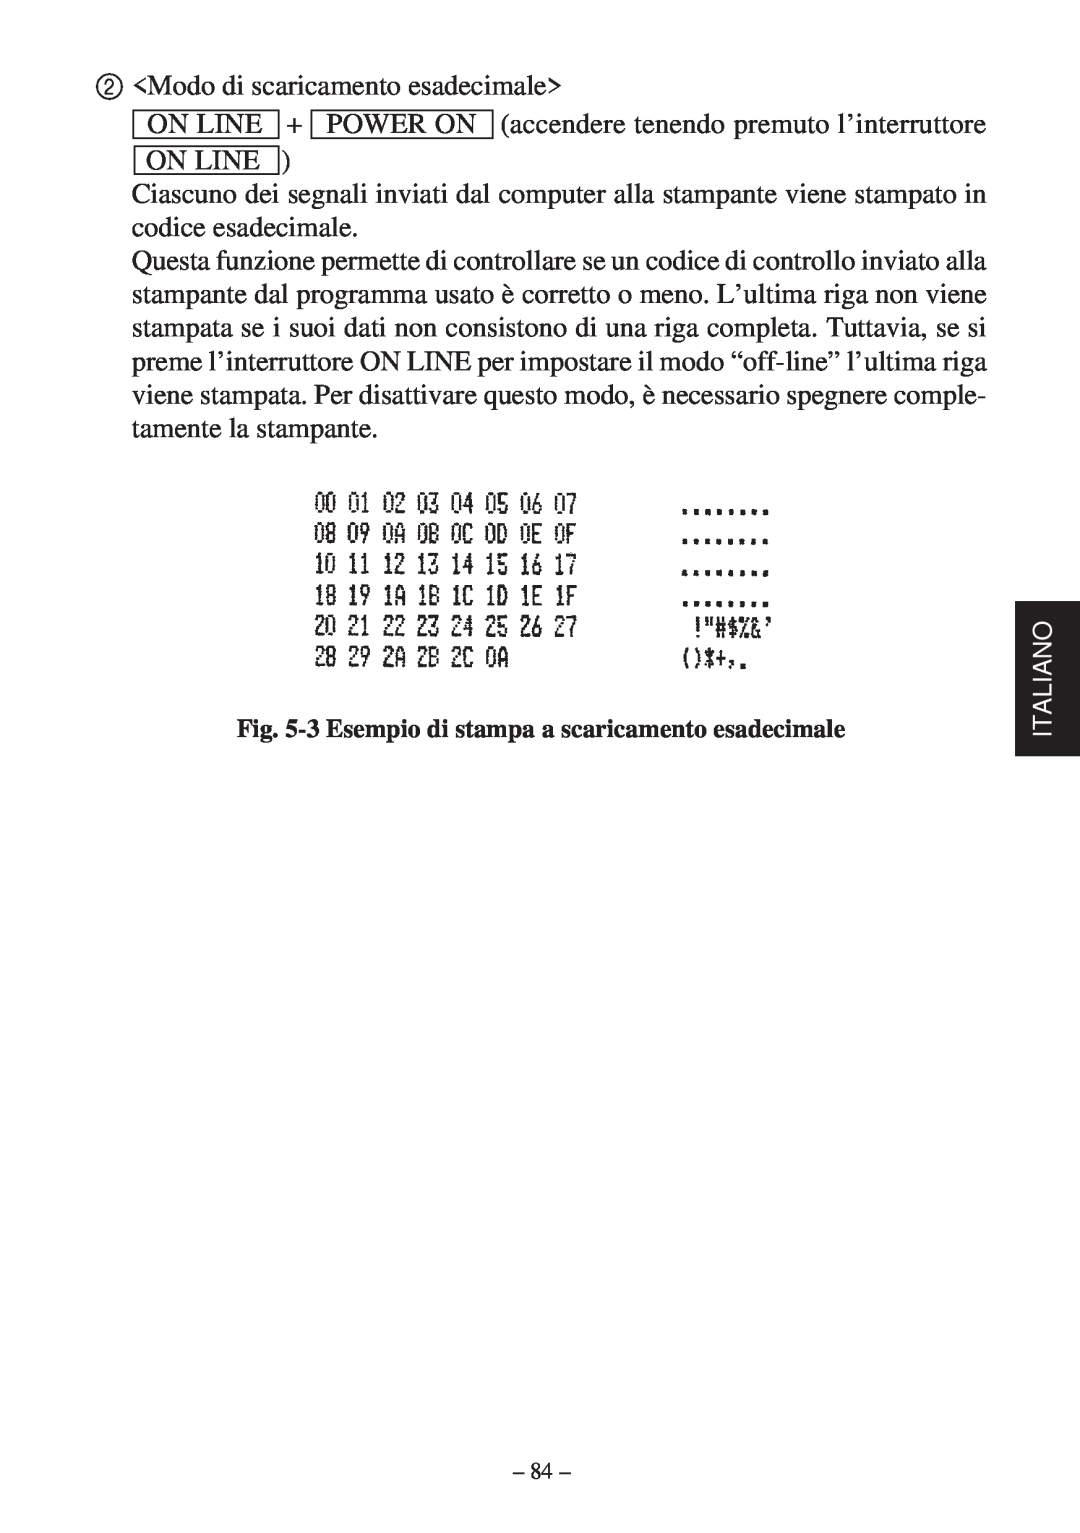 Star Micronics SP200F user manual Modo di scaricamento esadecimale 